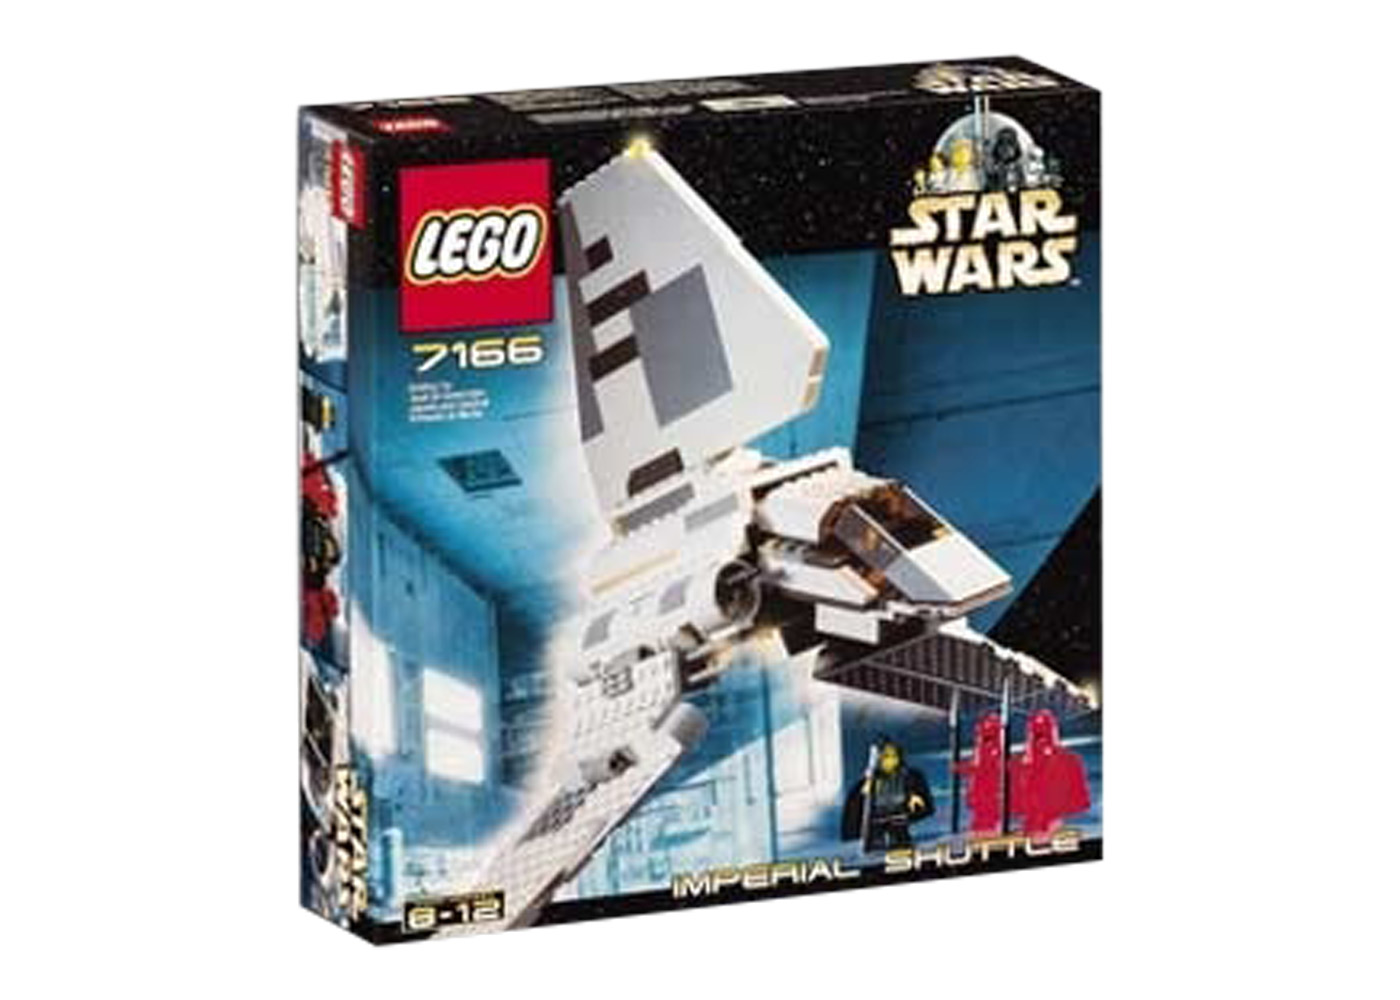 LEGO Star Wars Imperial Shuttle Set 7166 - CN